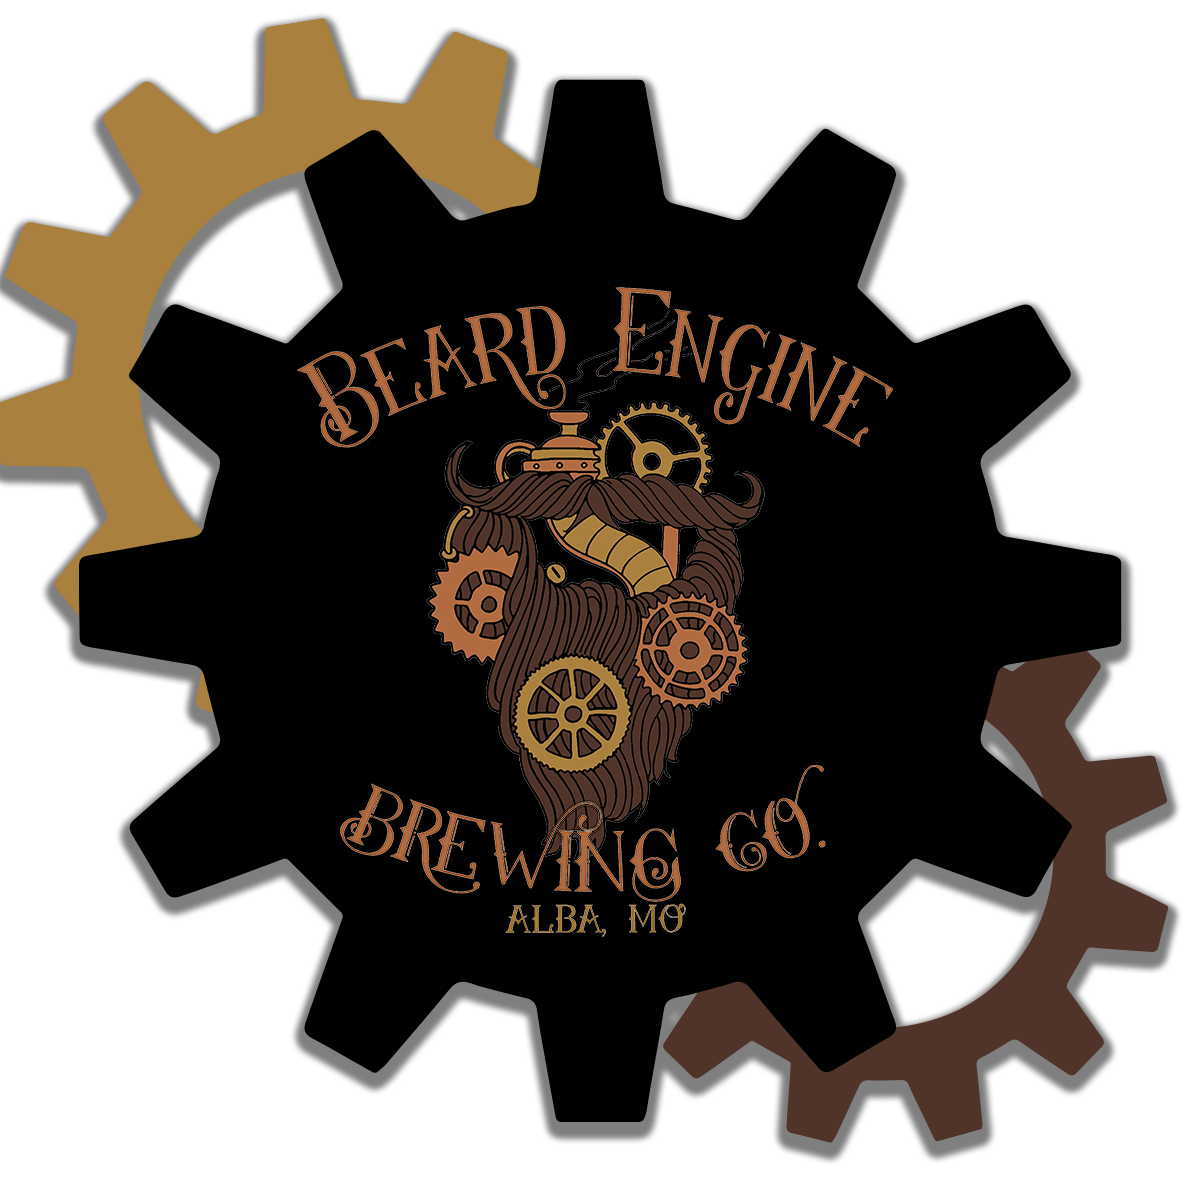 Beard Engine Brewing Co.